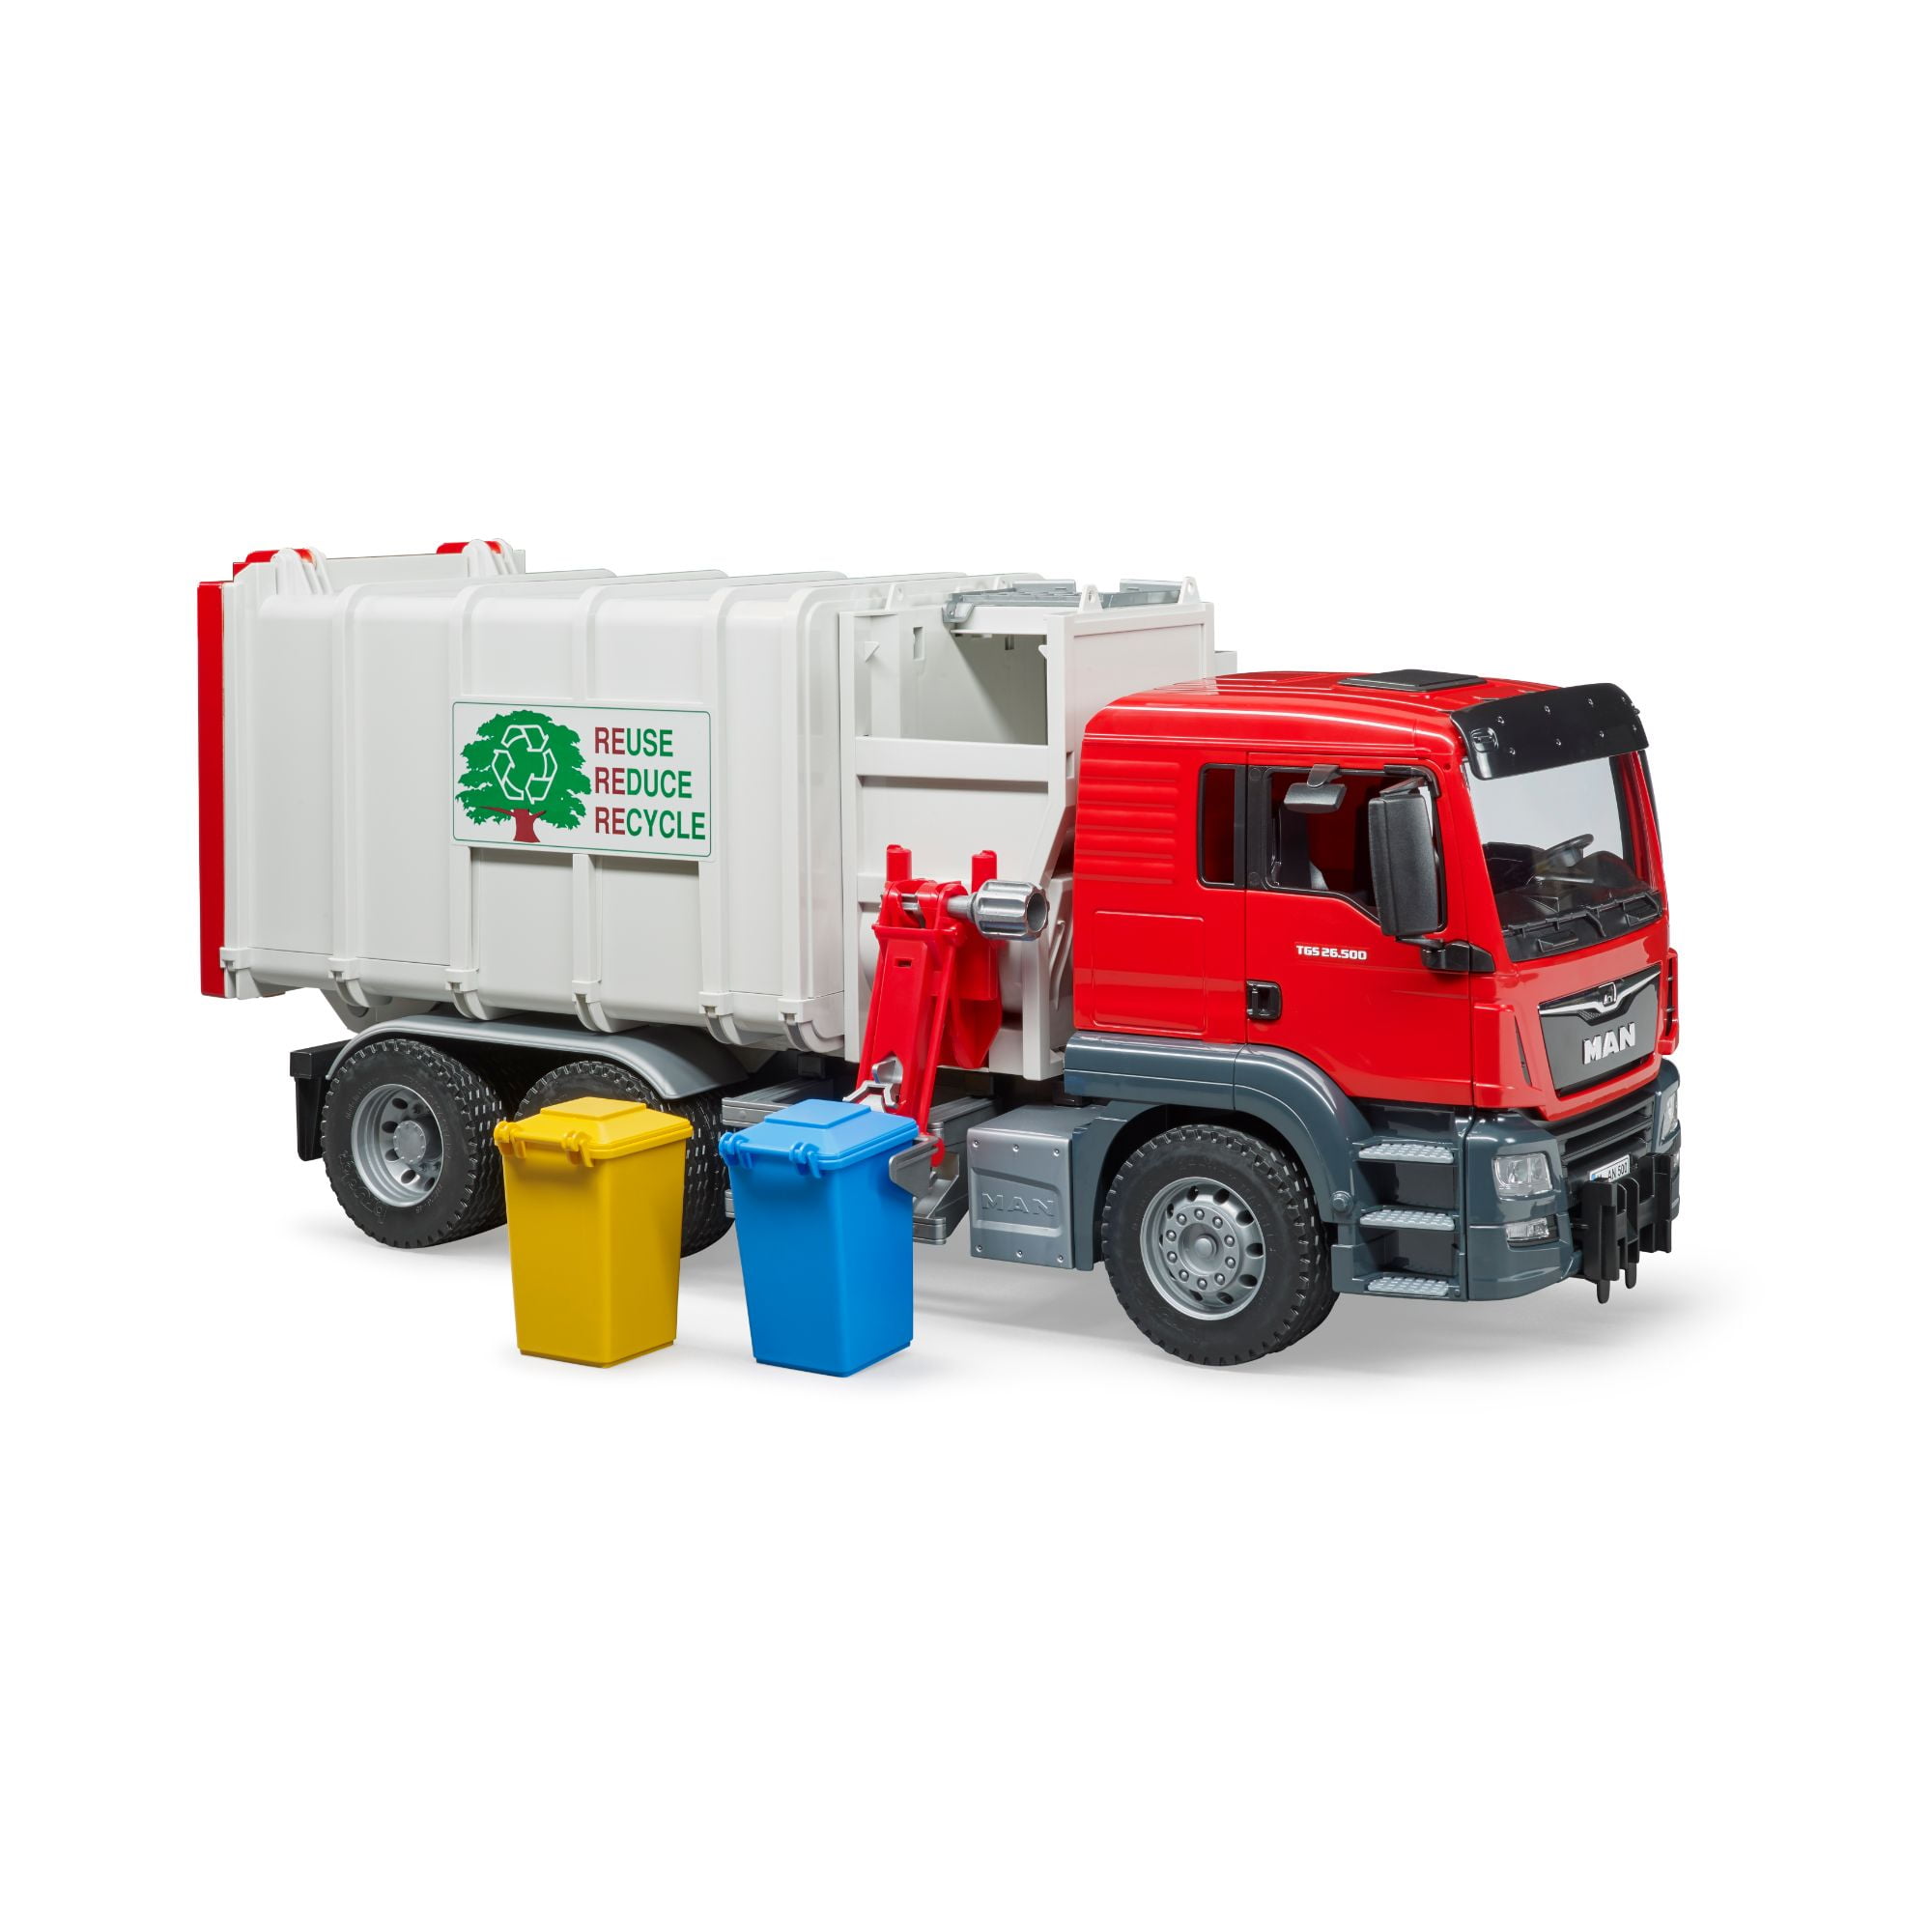 1/16th MACK Granite Side Loading Garbage Truck by Bruder 02811 